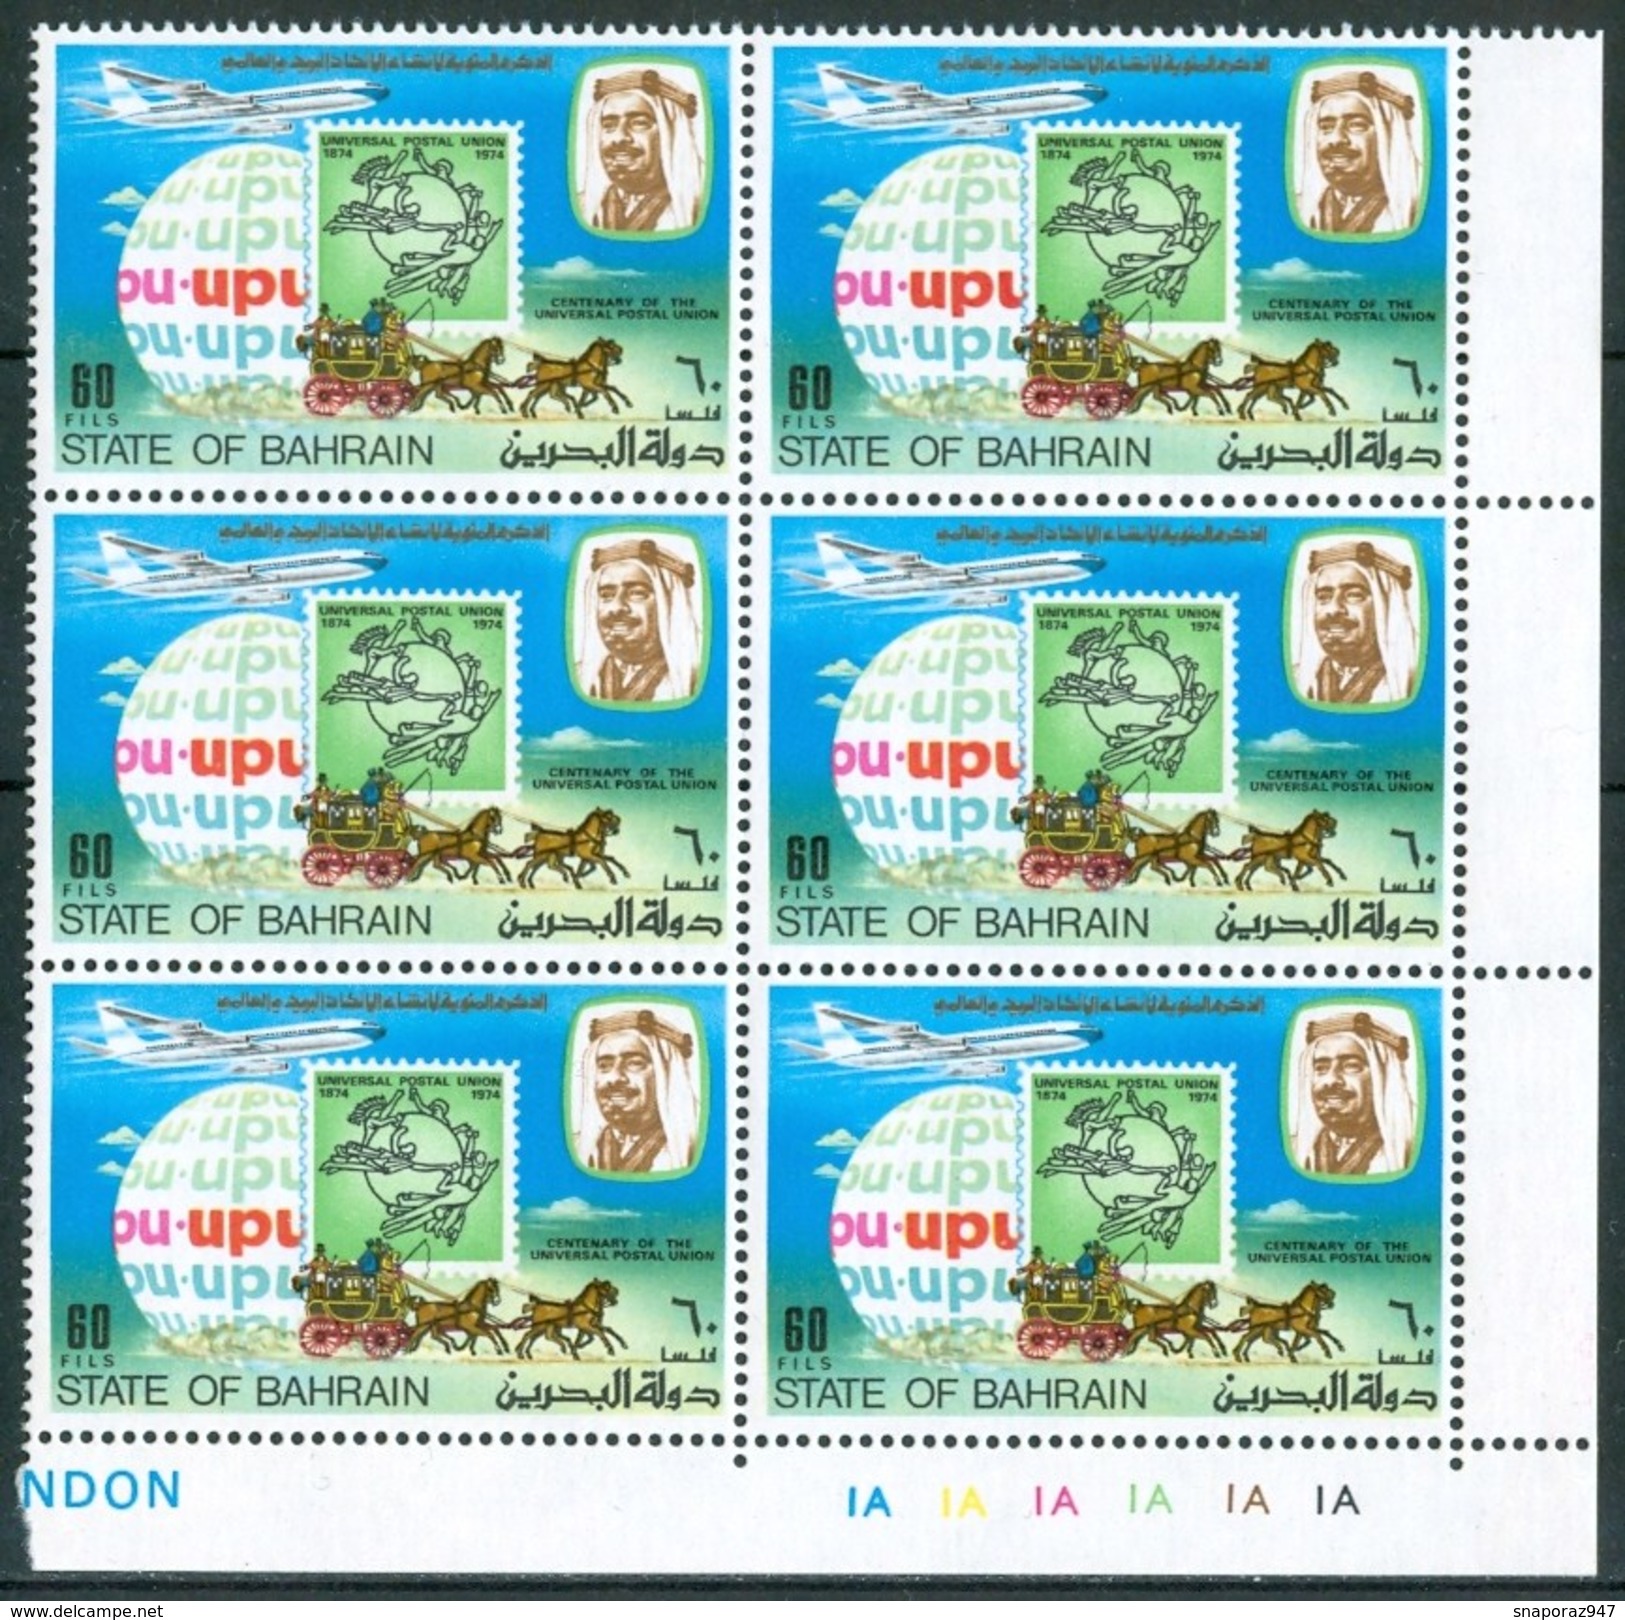 1974 Bahrein UPU Stamps On Stamps Set MNH** B604 - Bahrein (1965-...)